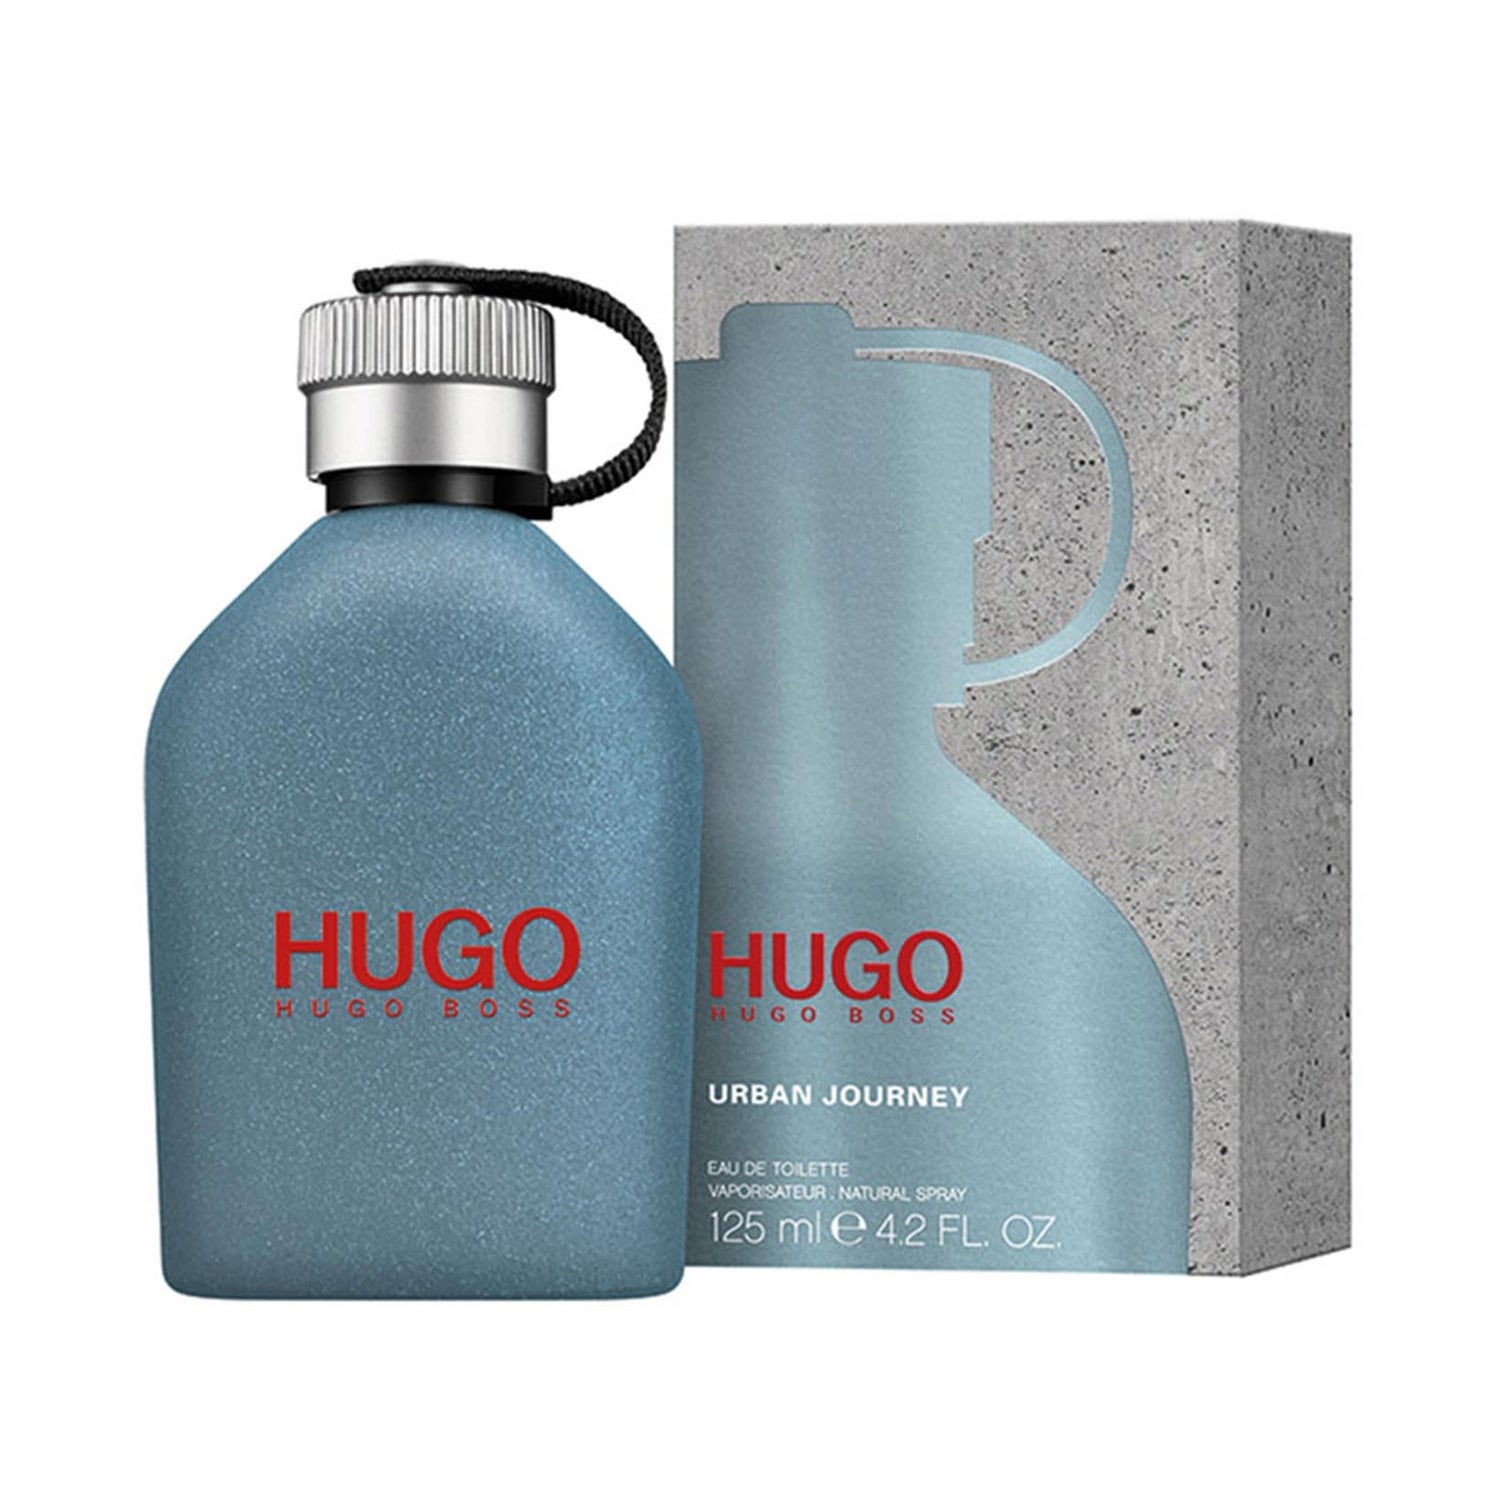 hugo boss urban journey 125ml price 